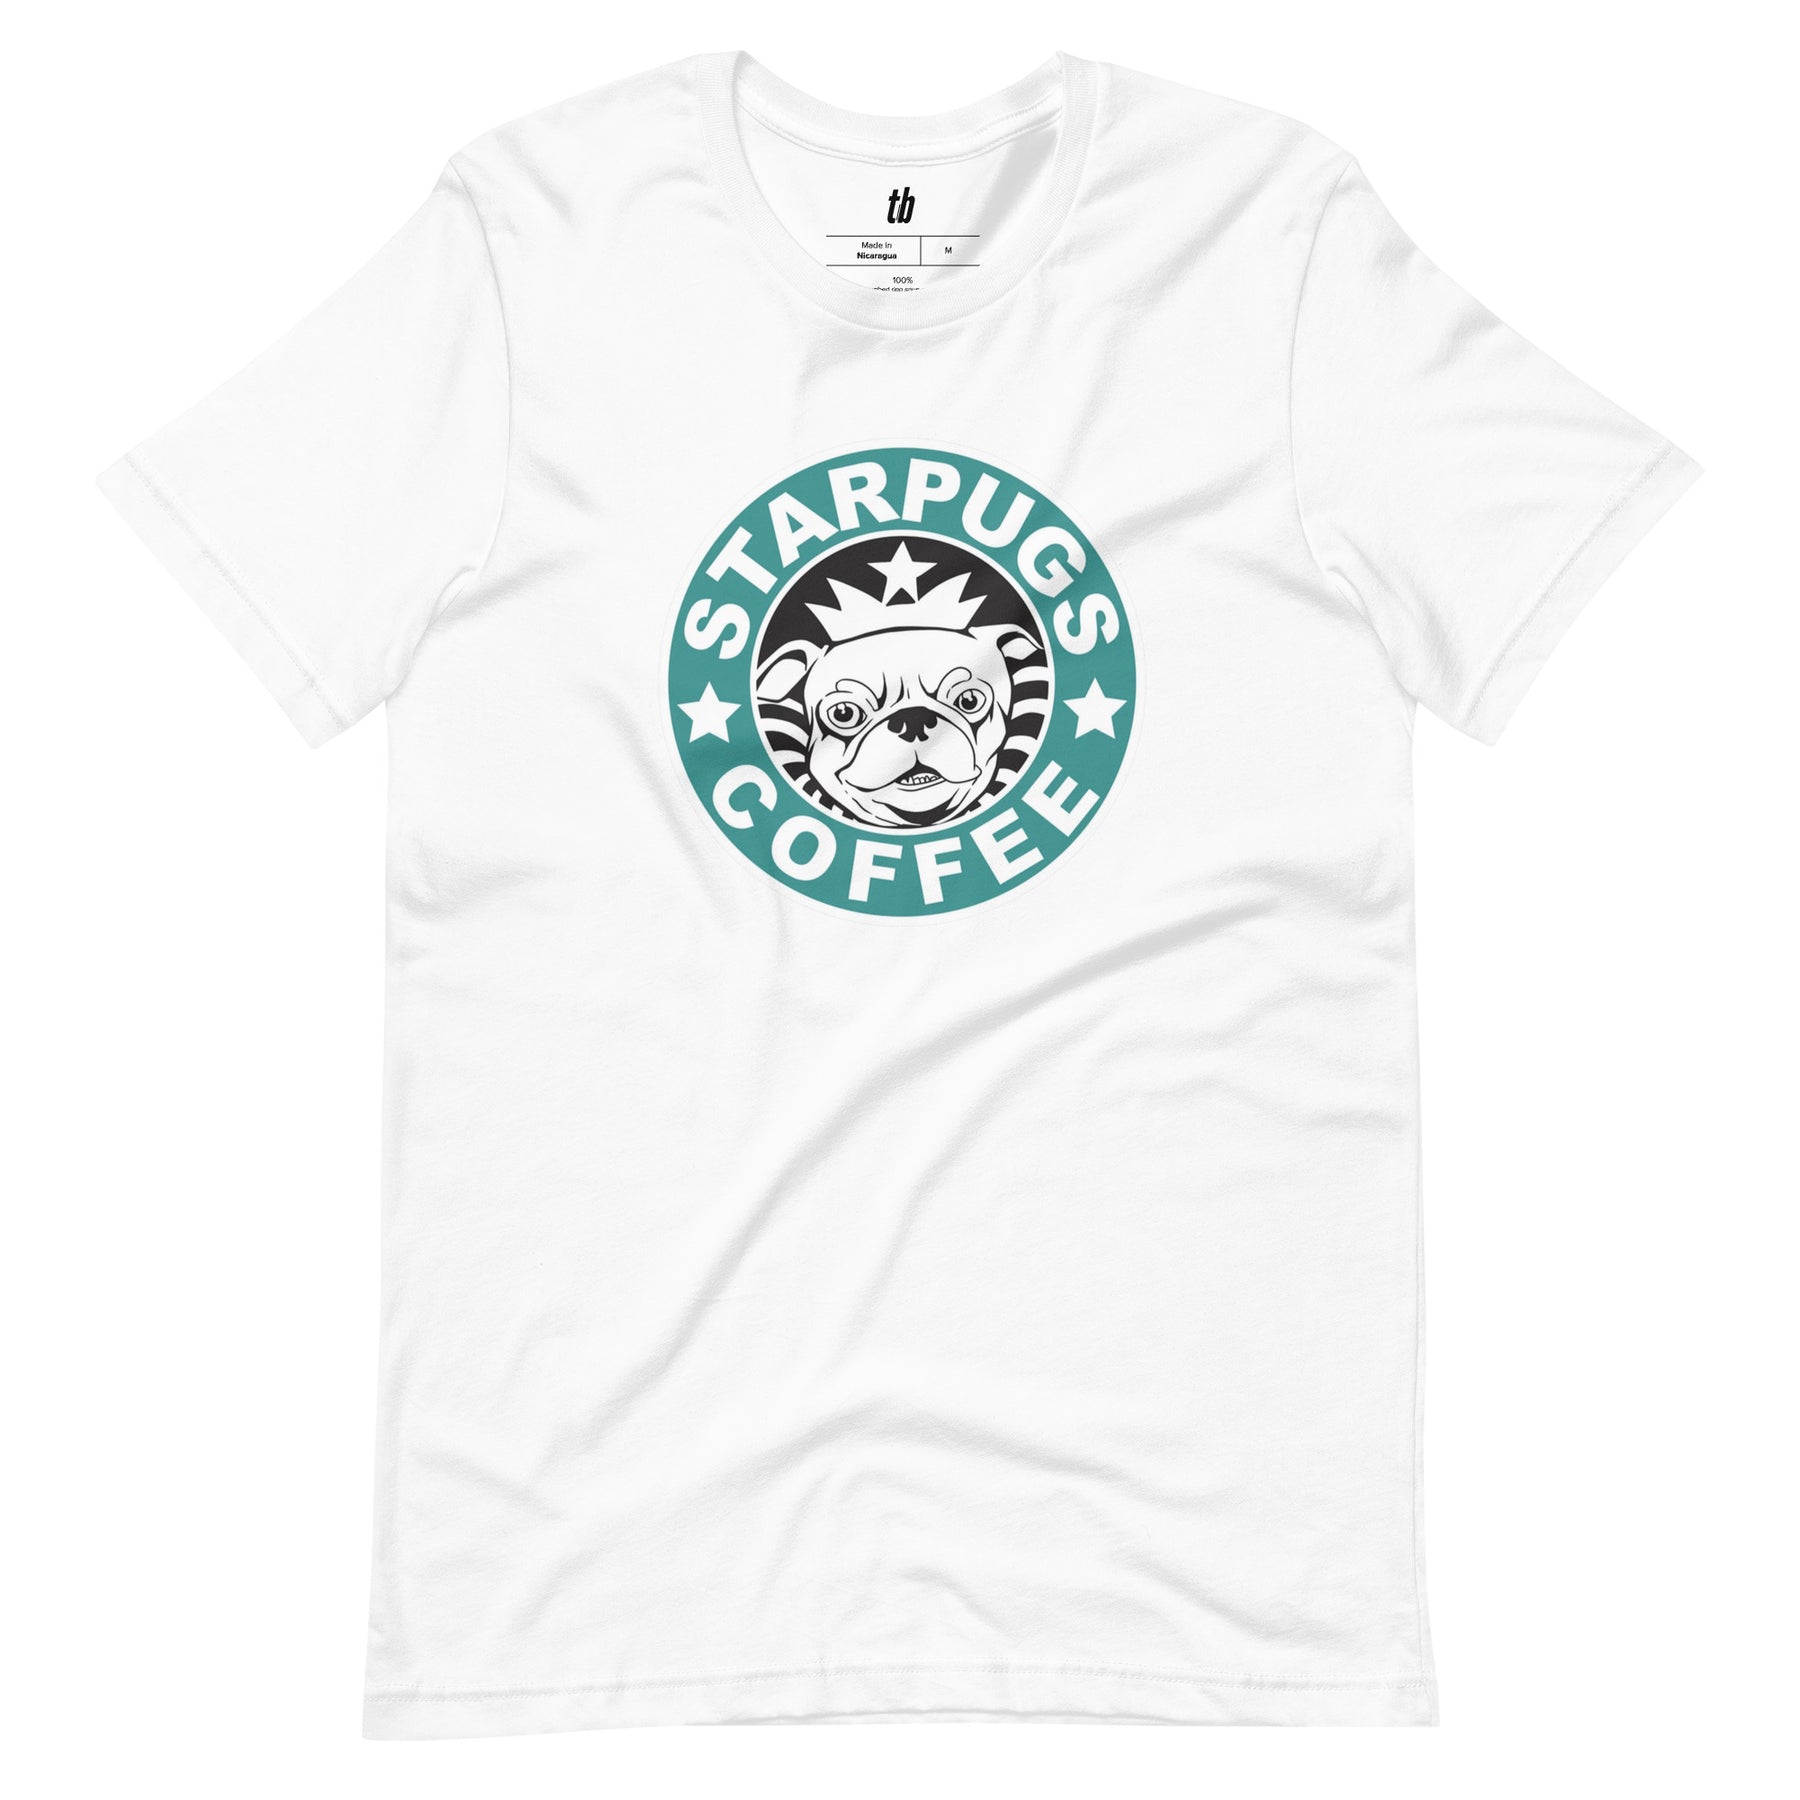 Starpugs T-Shirt - Teebop